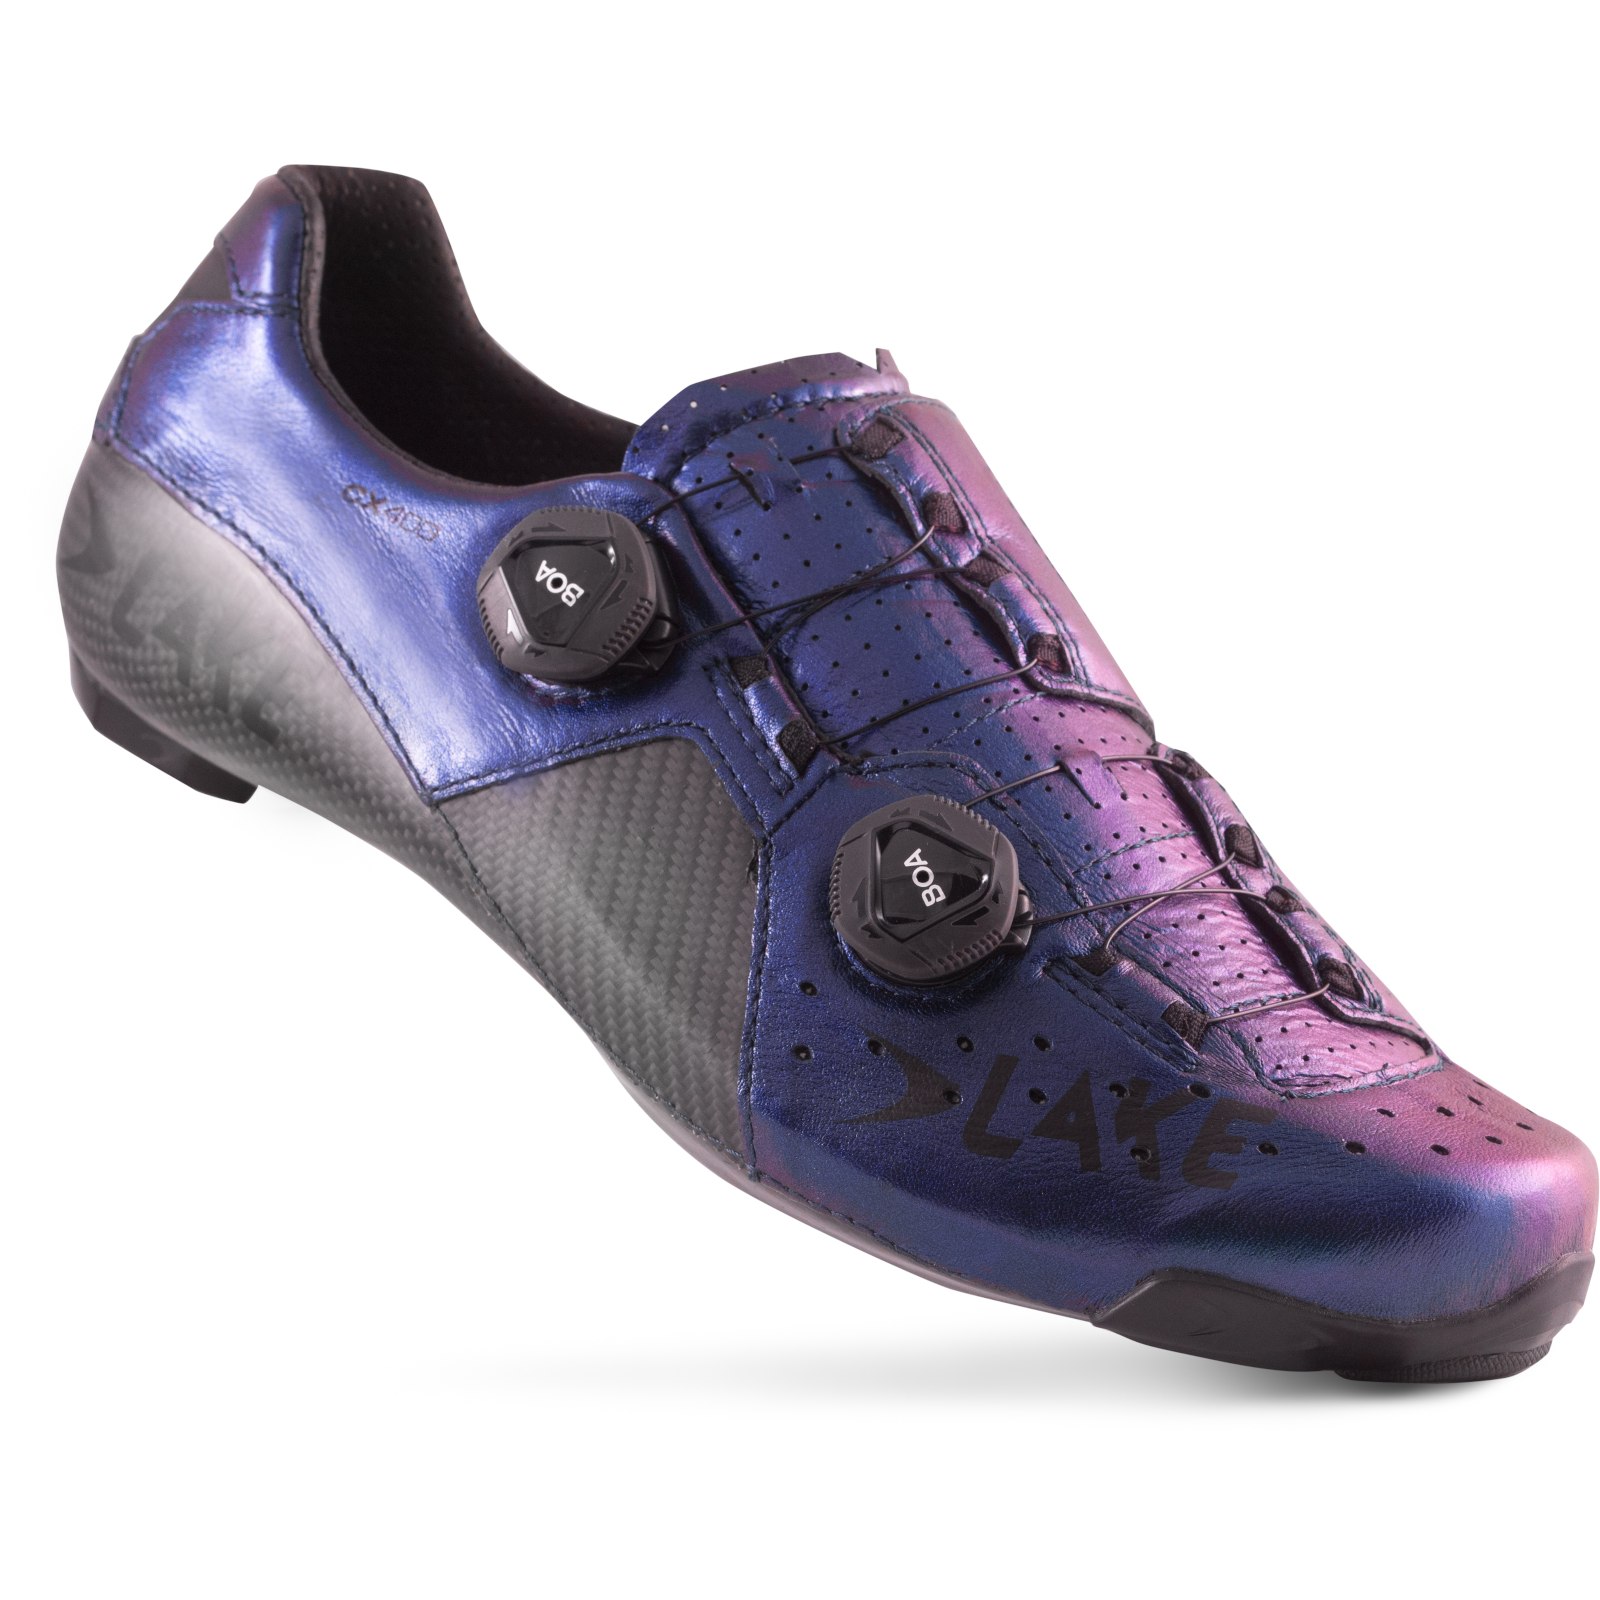 Image of Lake CX403 Road Shoes - chameleon blue/black